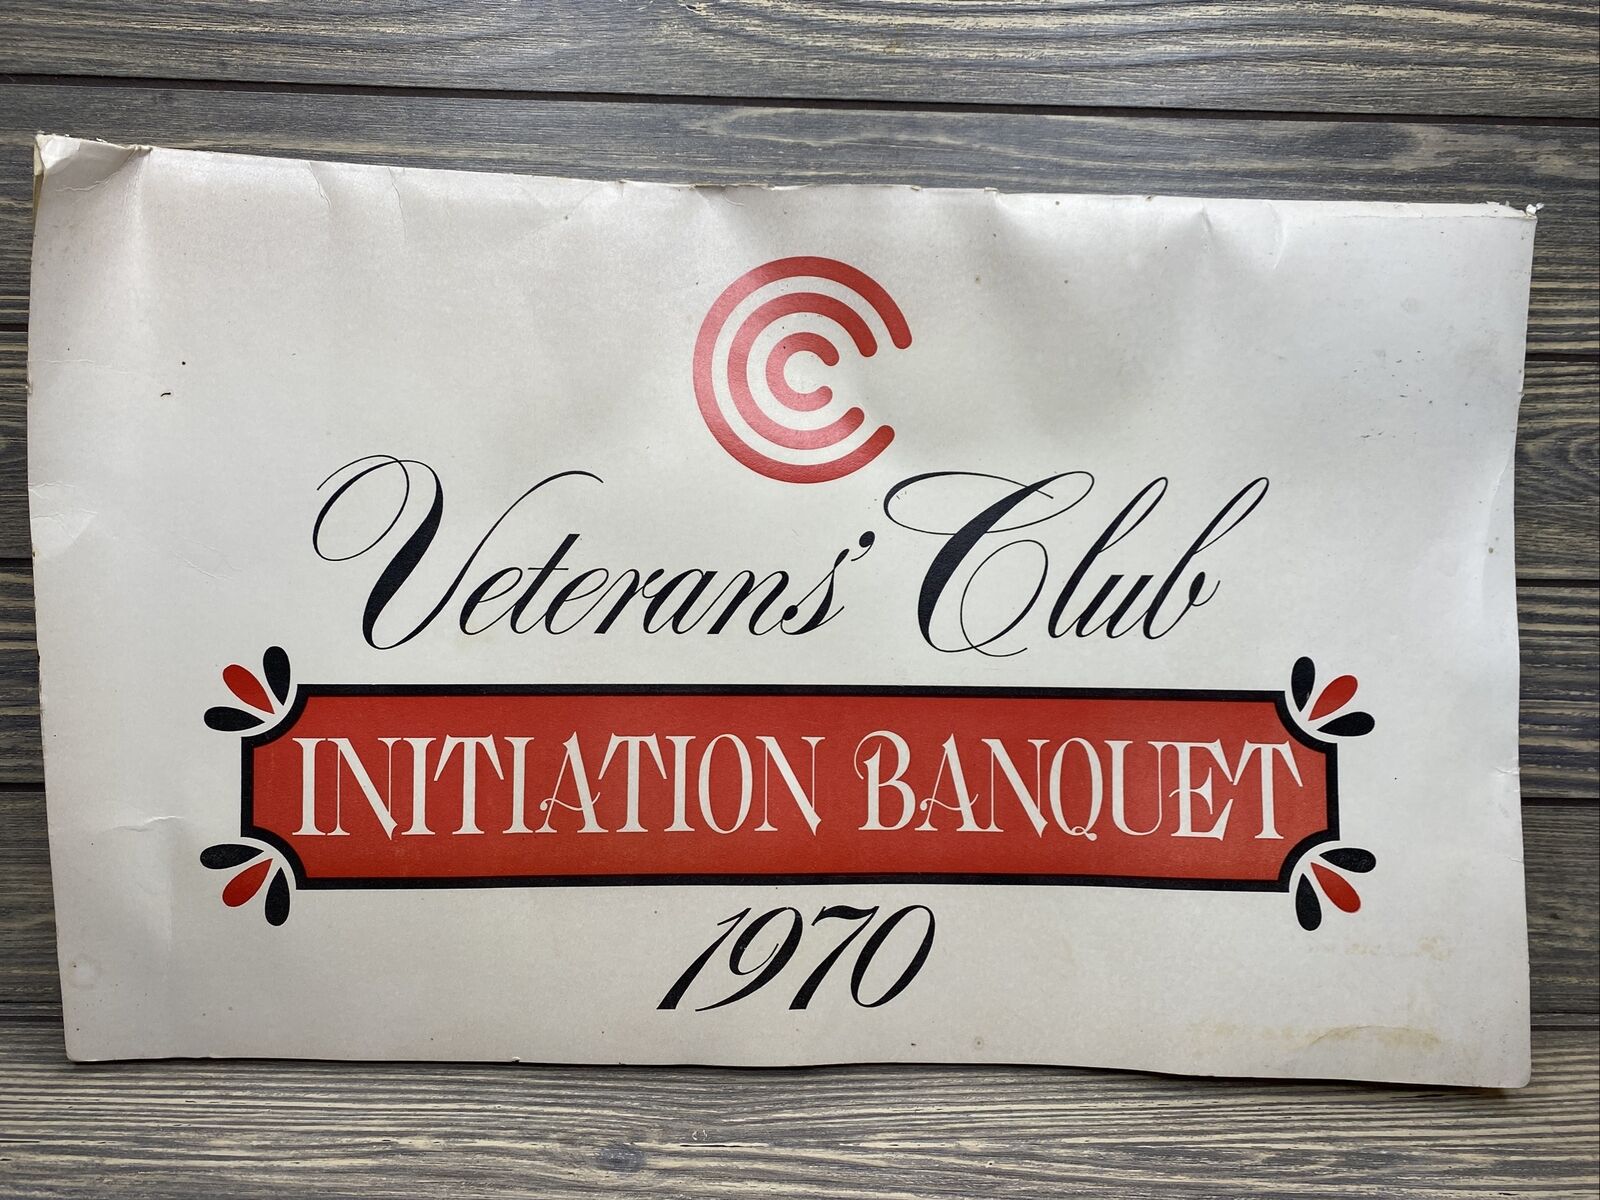 Vintage Veterans Club Invitation Banquet 1970 Plastic Place Mat Birds Lot of 8 